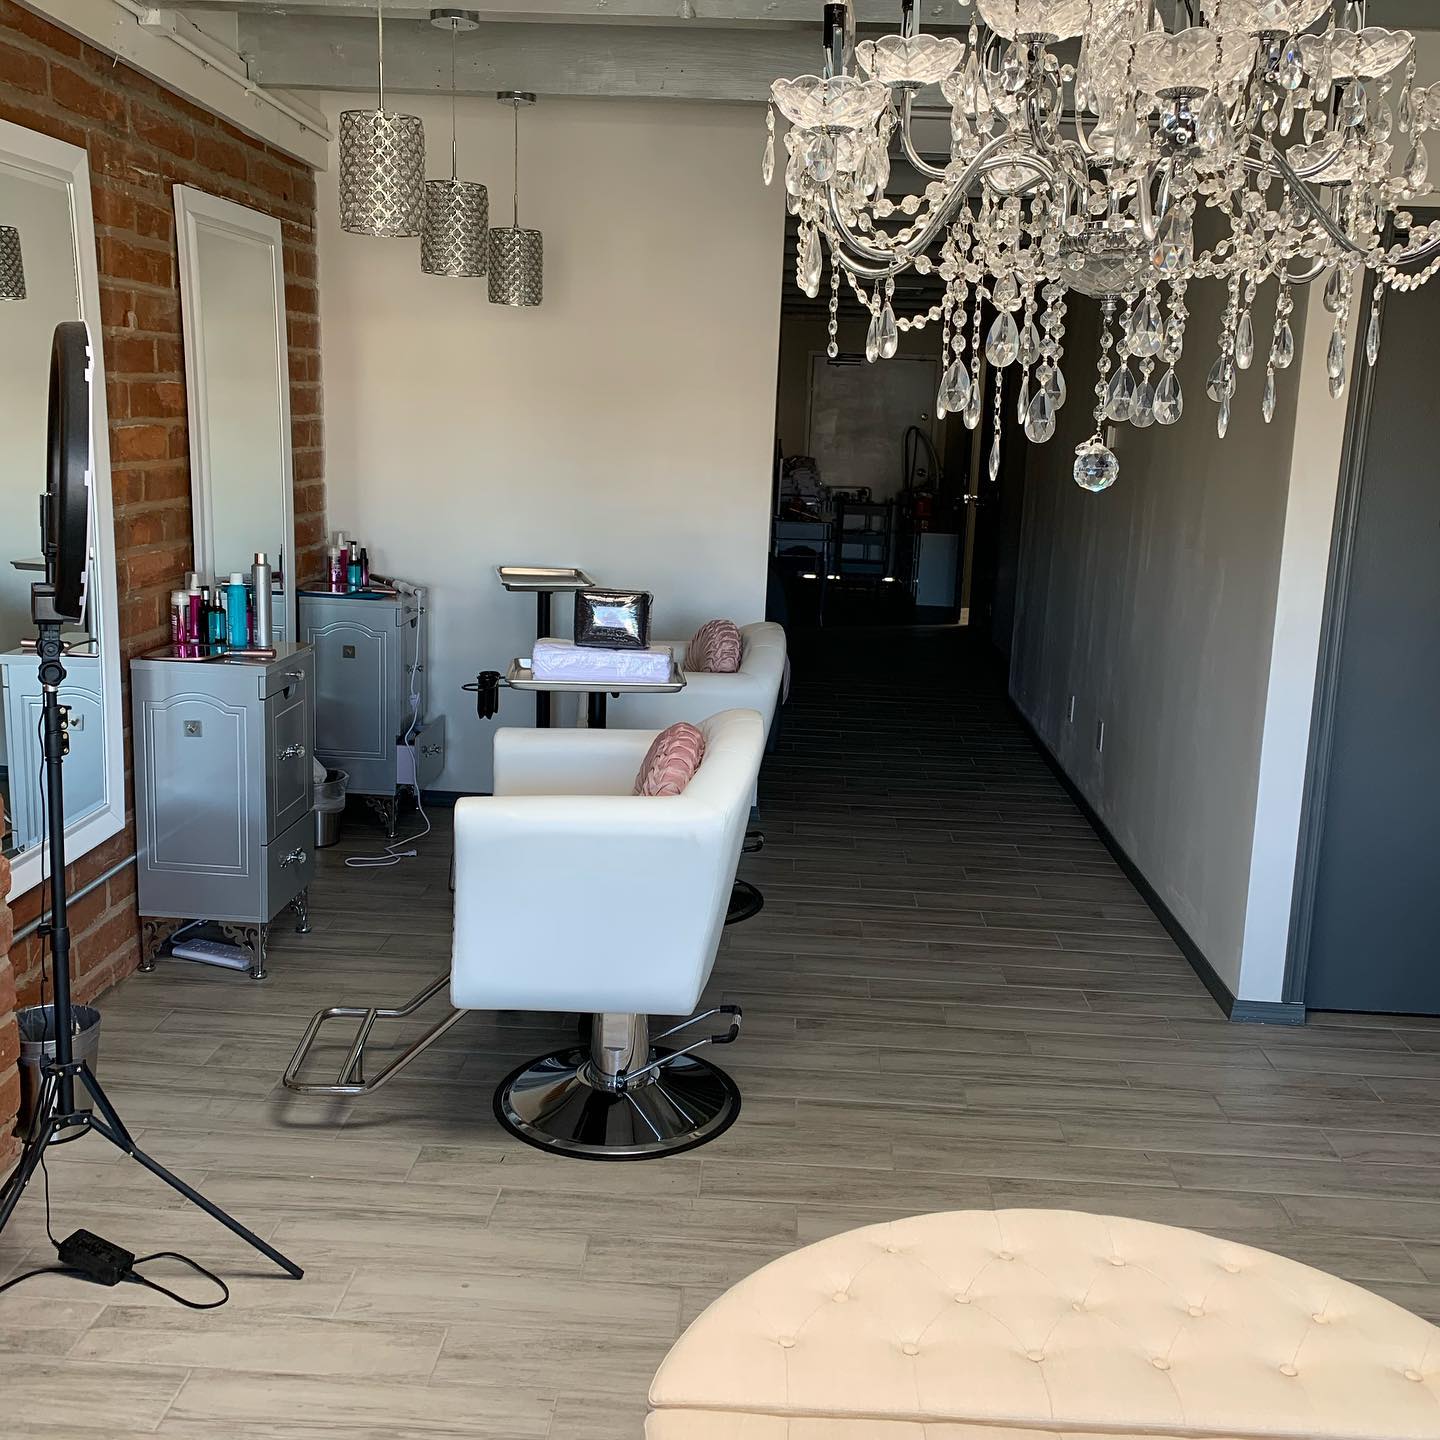 Genev Beauty Lounge ~ Brockville, Ontario Beauty Salon